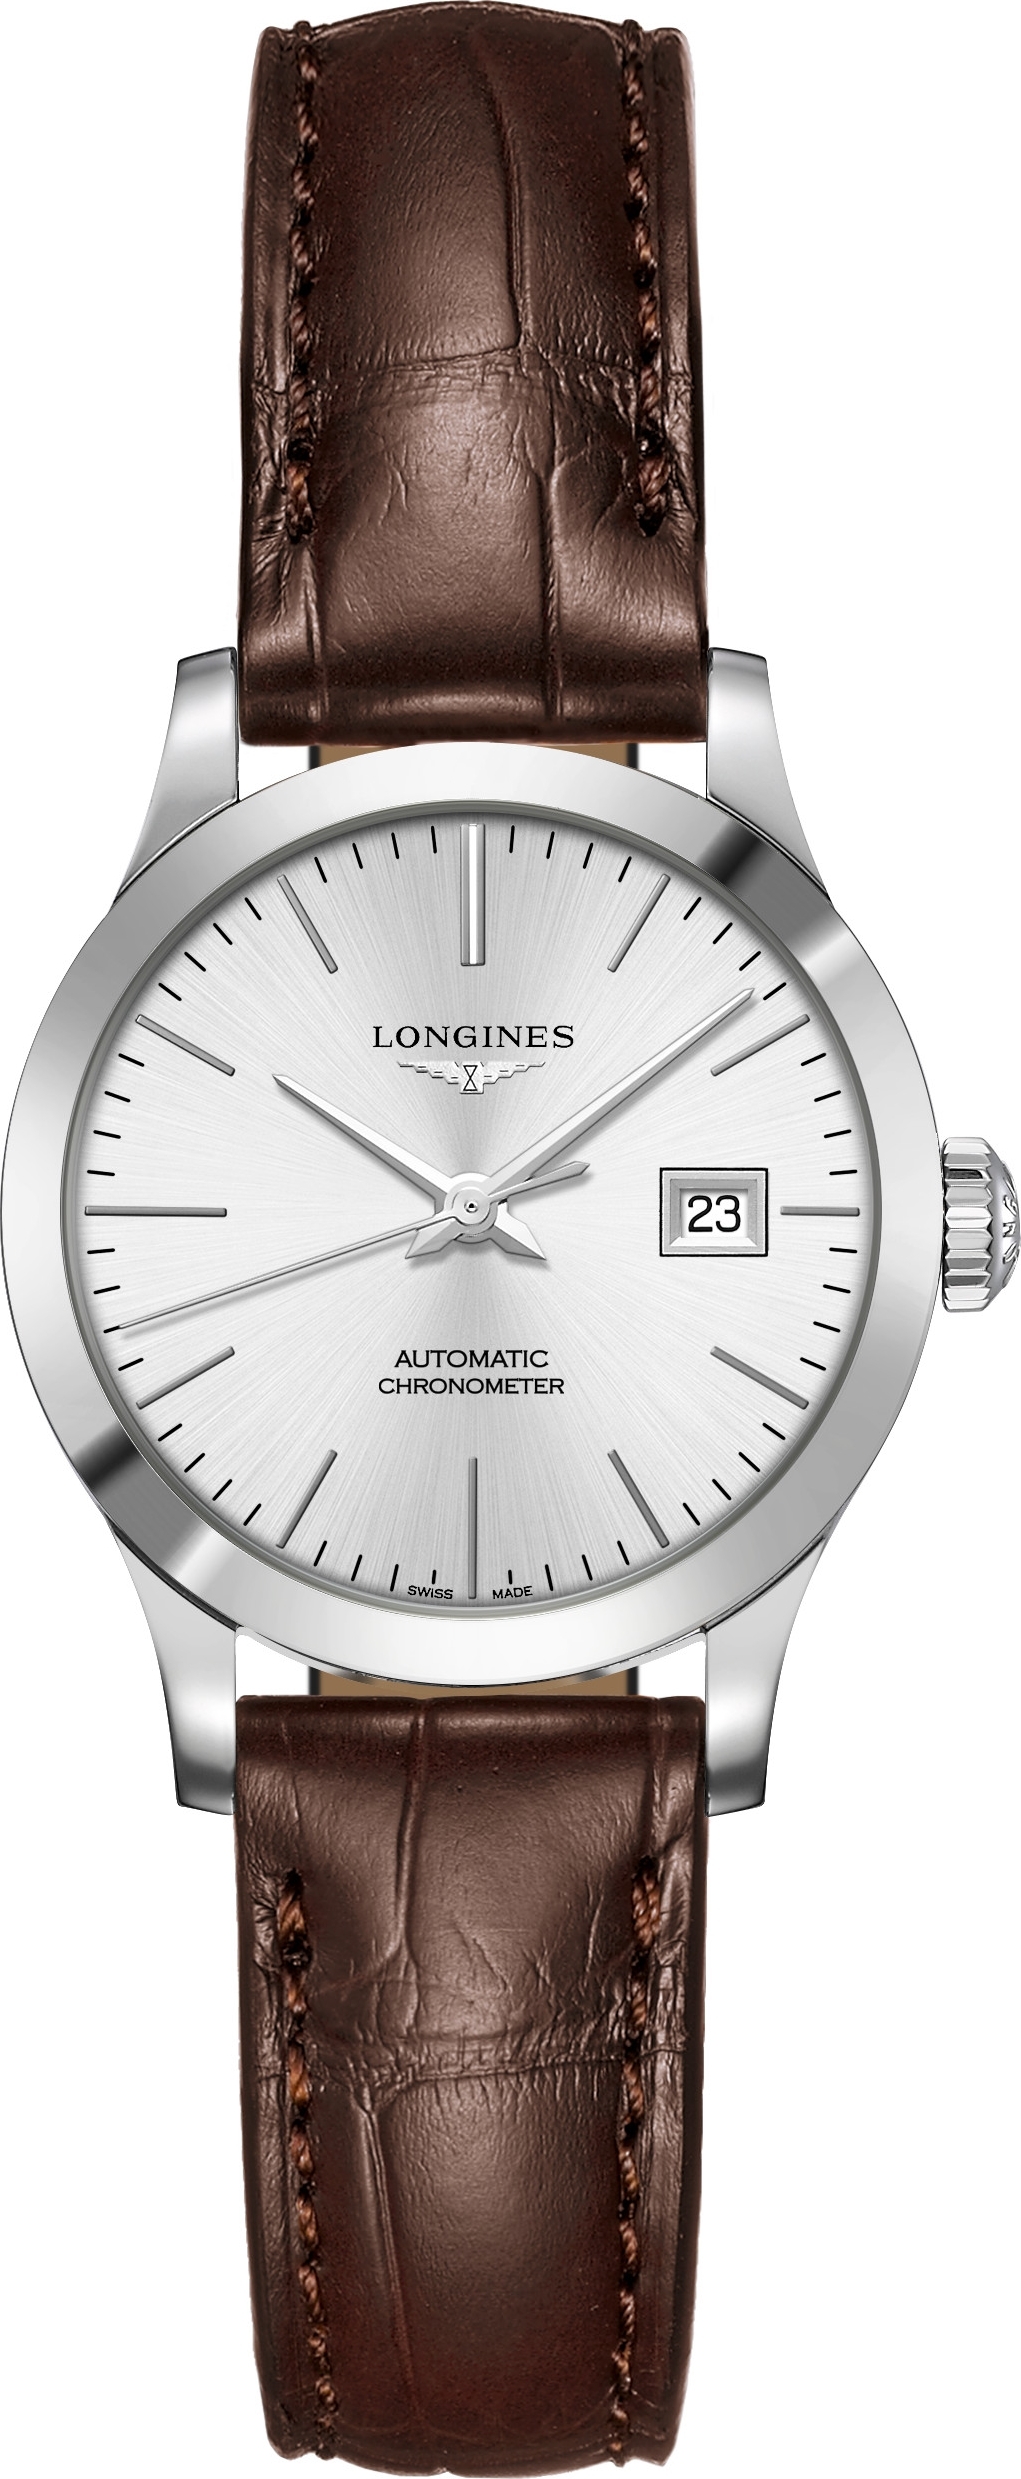 Đồng hồ nữ Longines L2.321.4.72.2